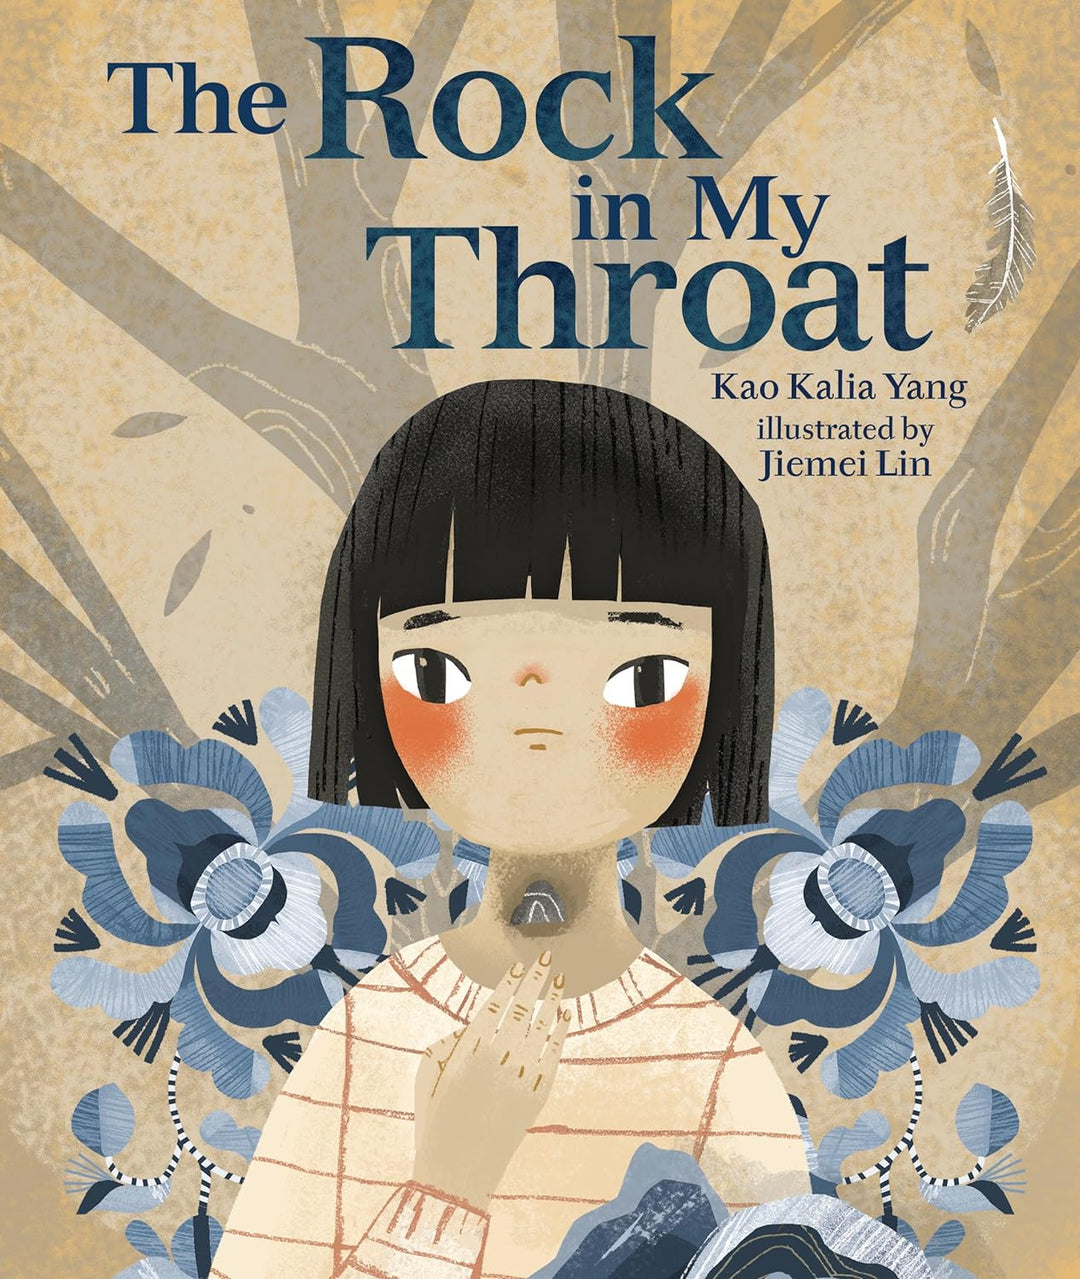 The Rock in My Throat by Kao Kalia Yang